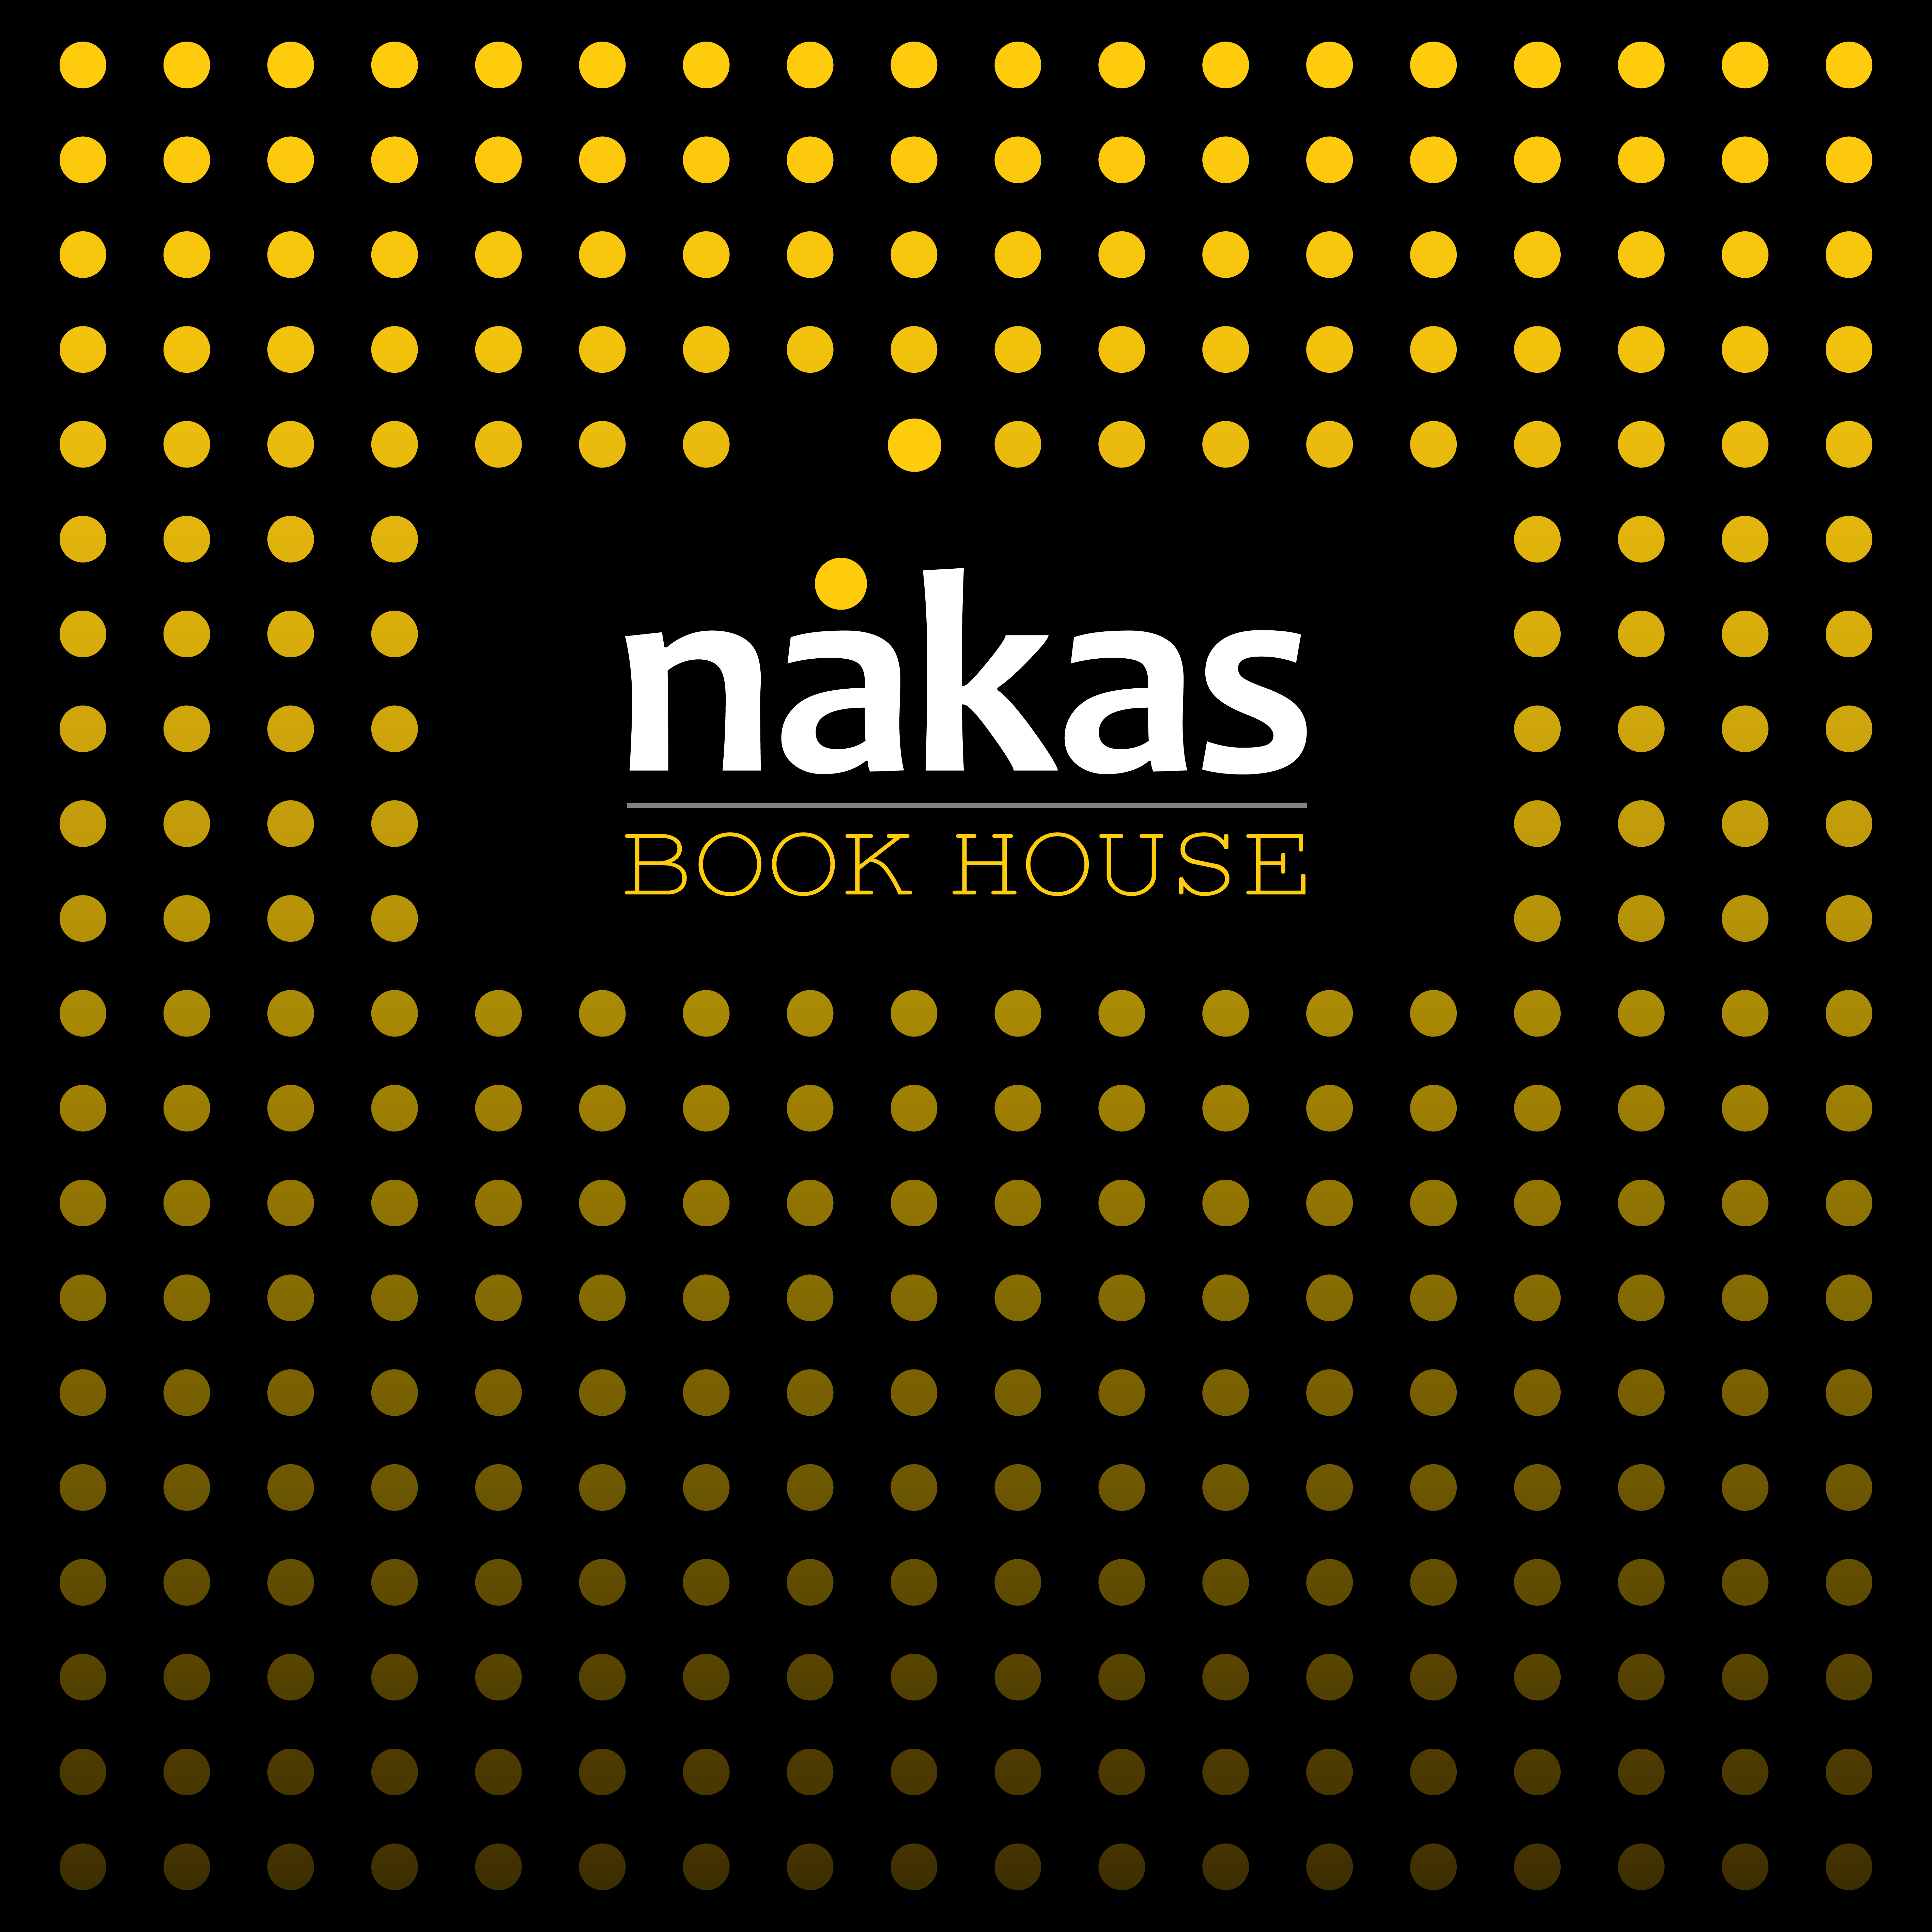 NEW NAKAS BOOK HOUSE!